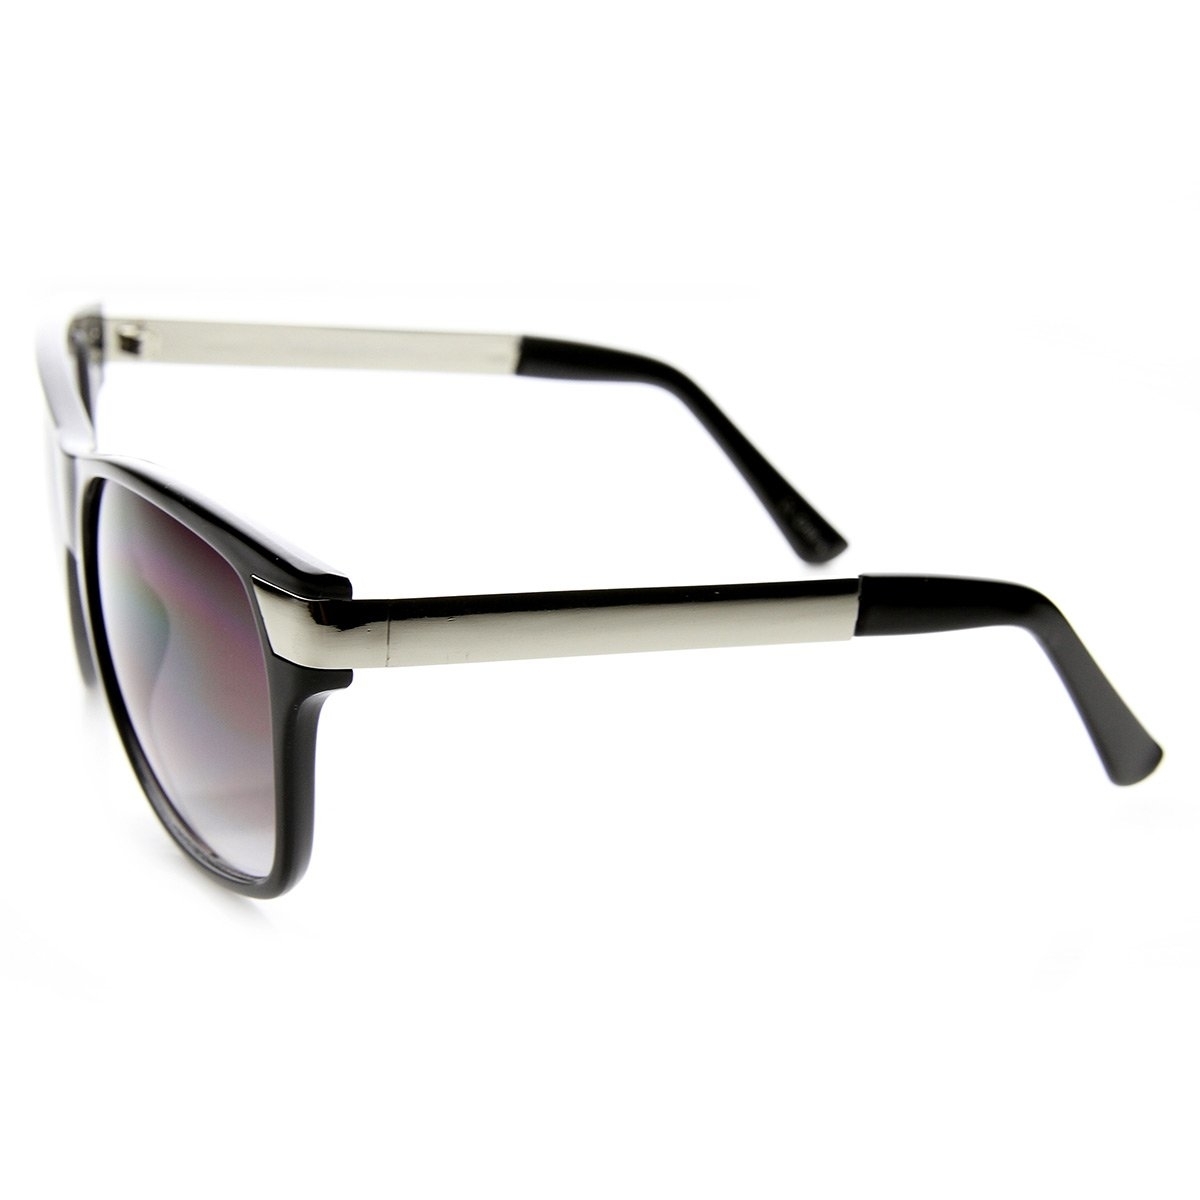 Premium High Fashion Metal Temple Mod Horn Rimmed Sunglasses - Black-Silver Lavender